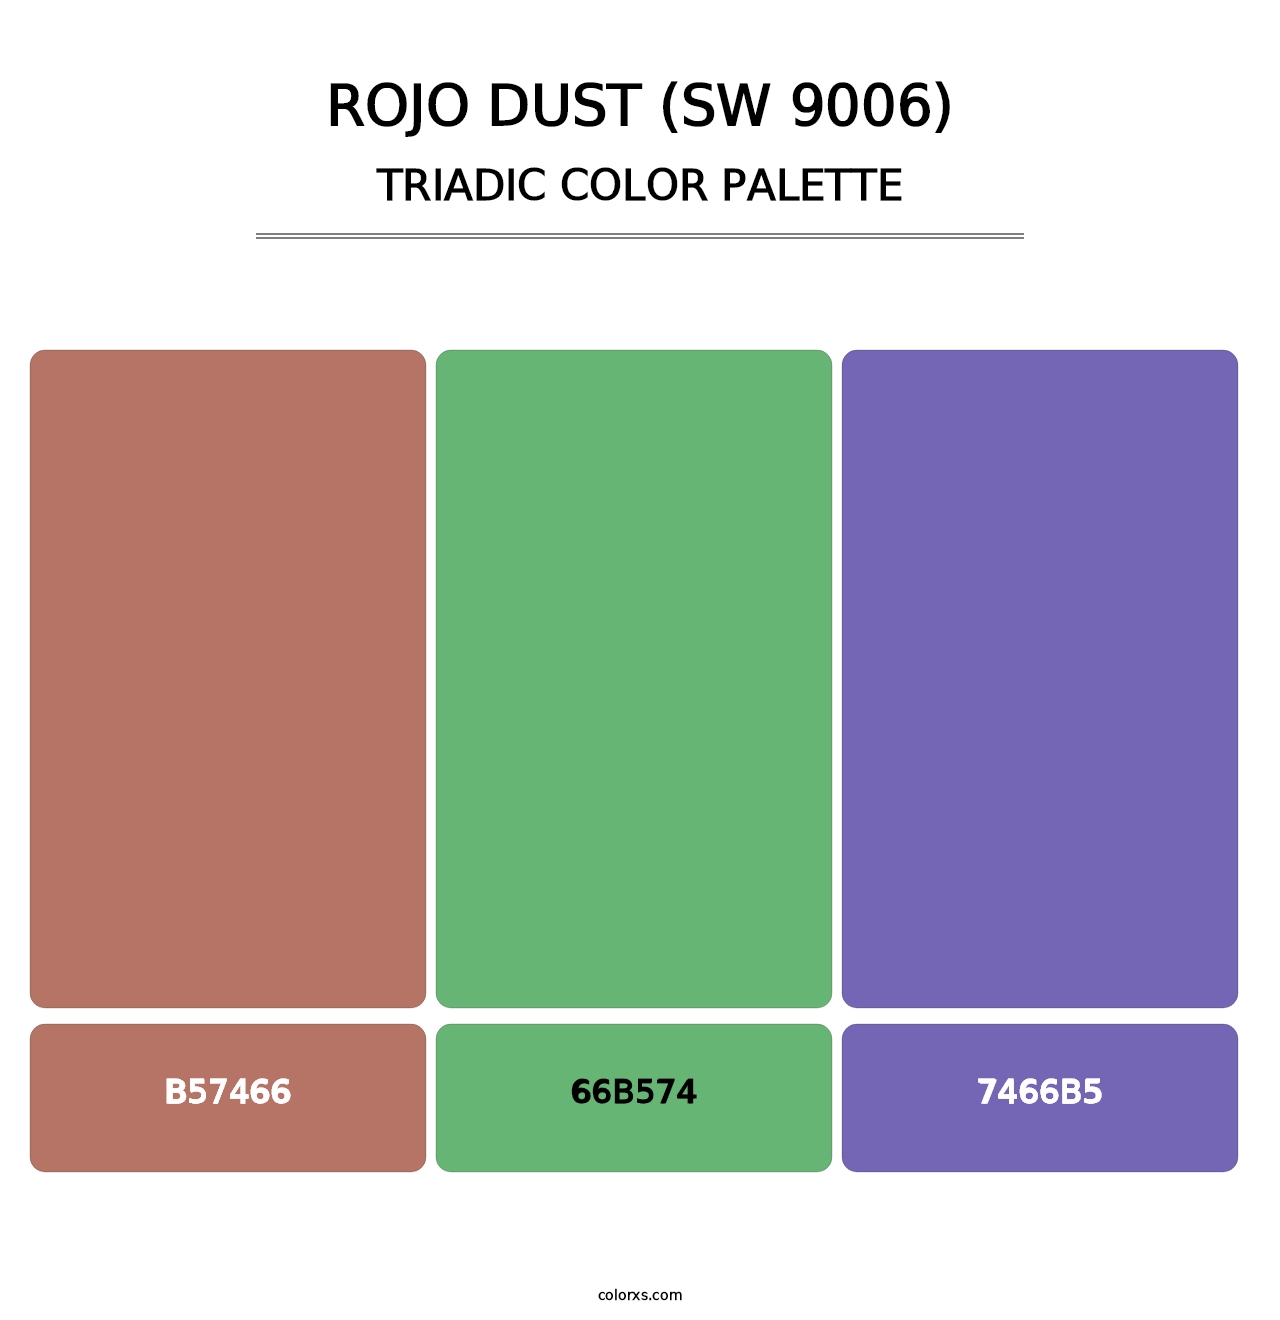 Rojo Dust (SW 9006) - Triadic Color Palette